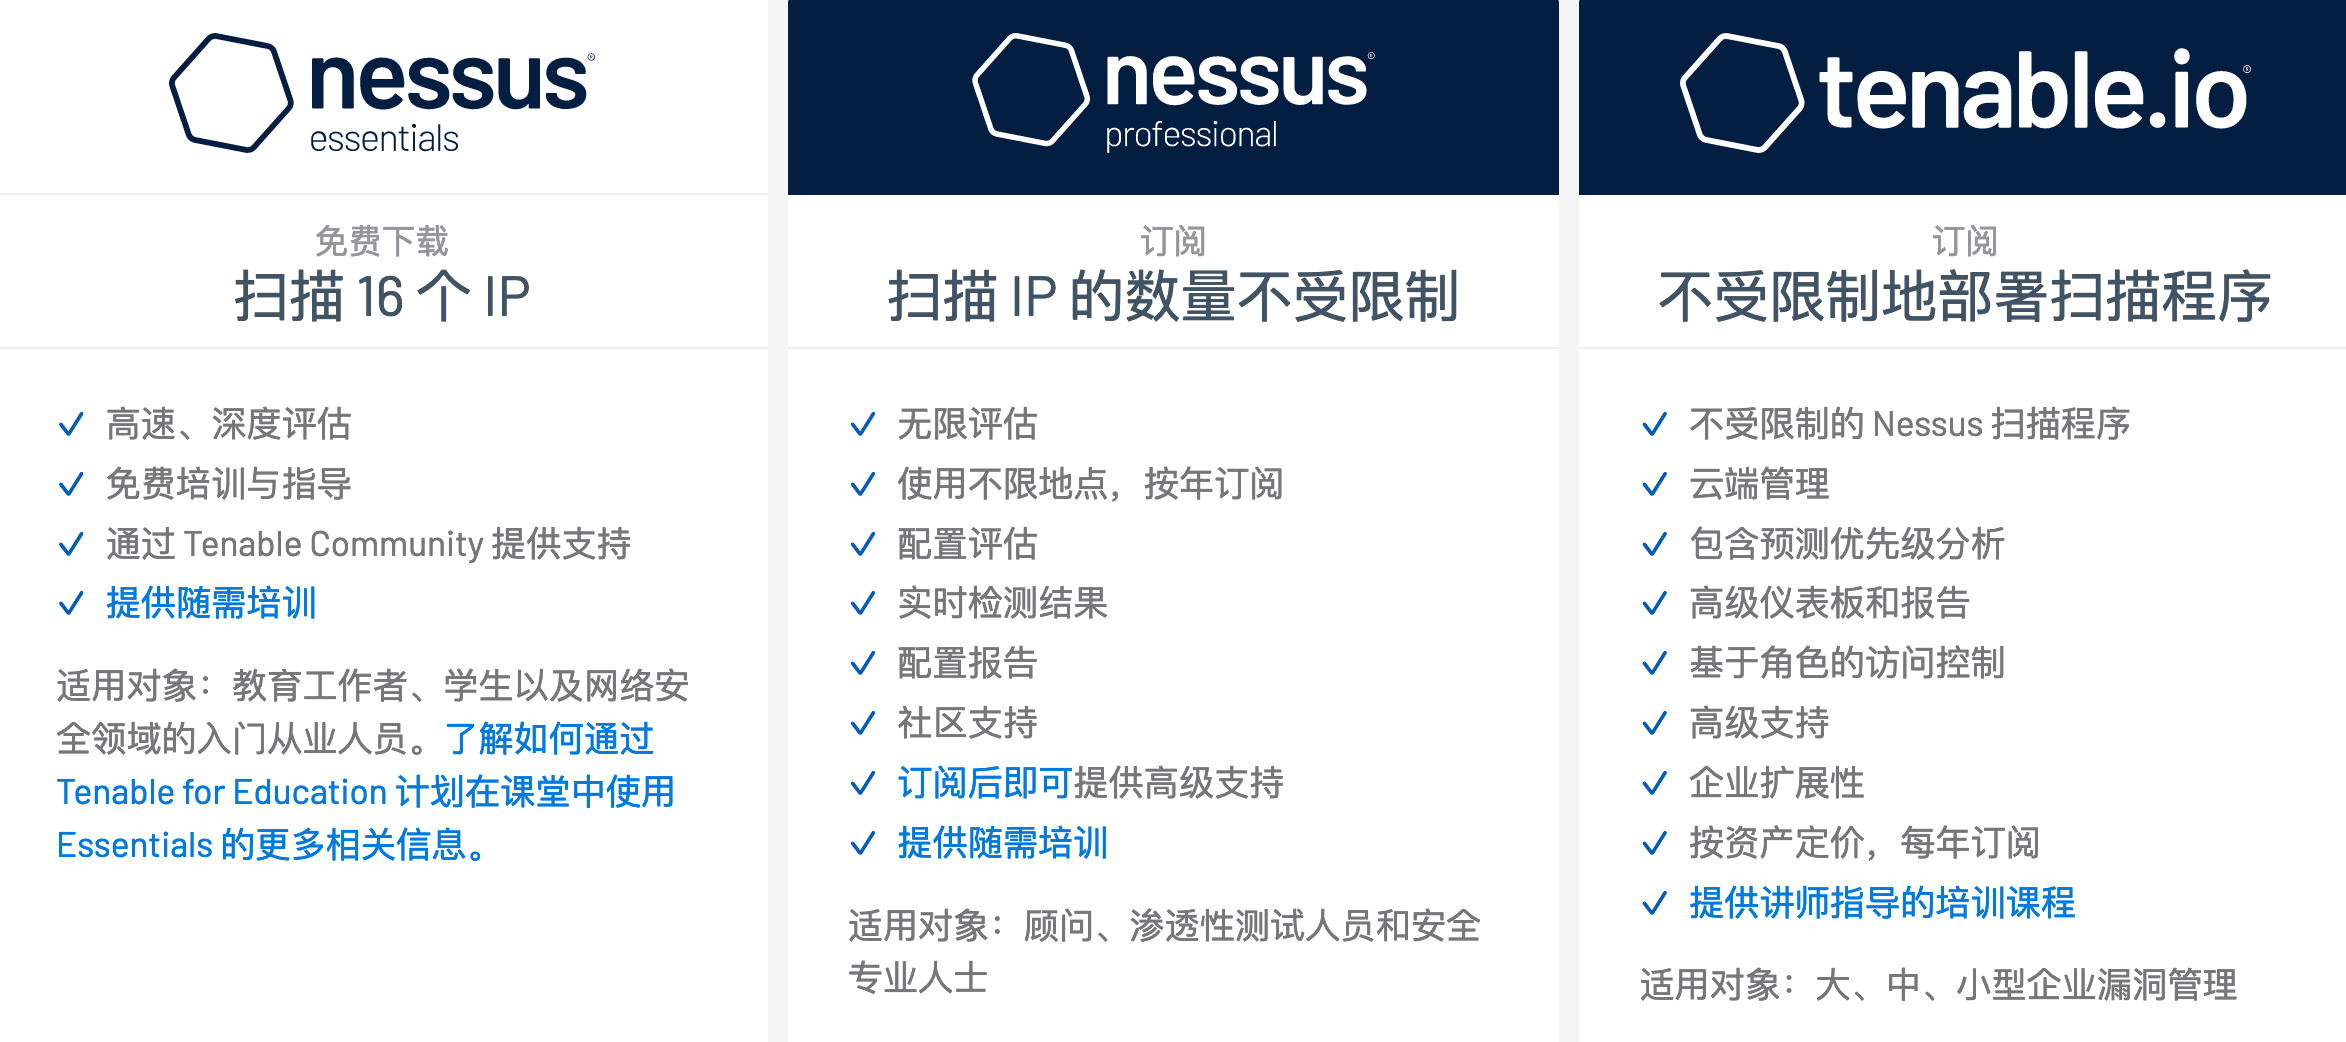 nessus-version-compare